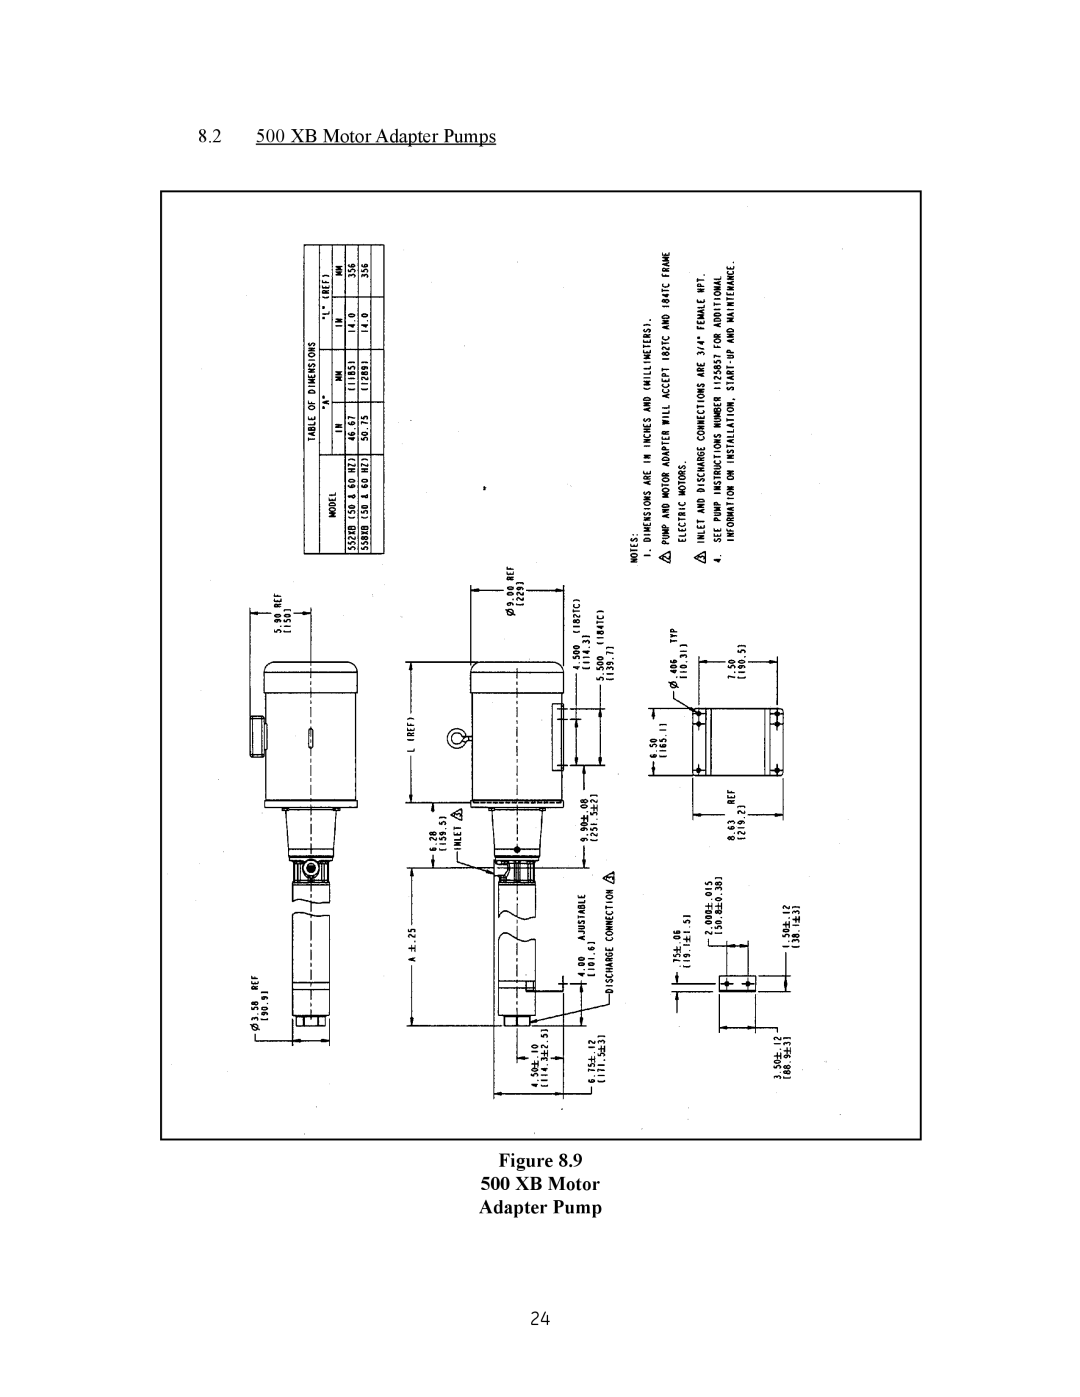 GE SS1000, SS1800, SS500 manual XB Motor Adapter Pumps 